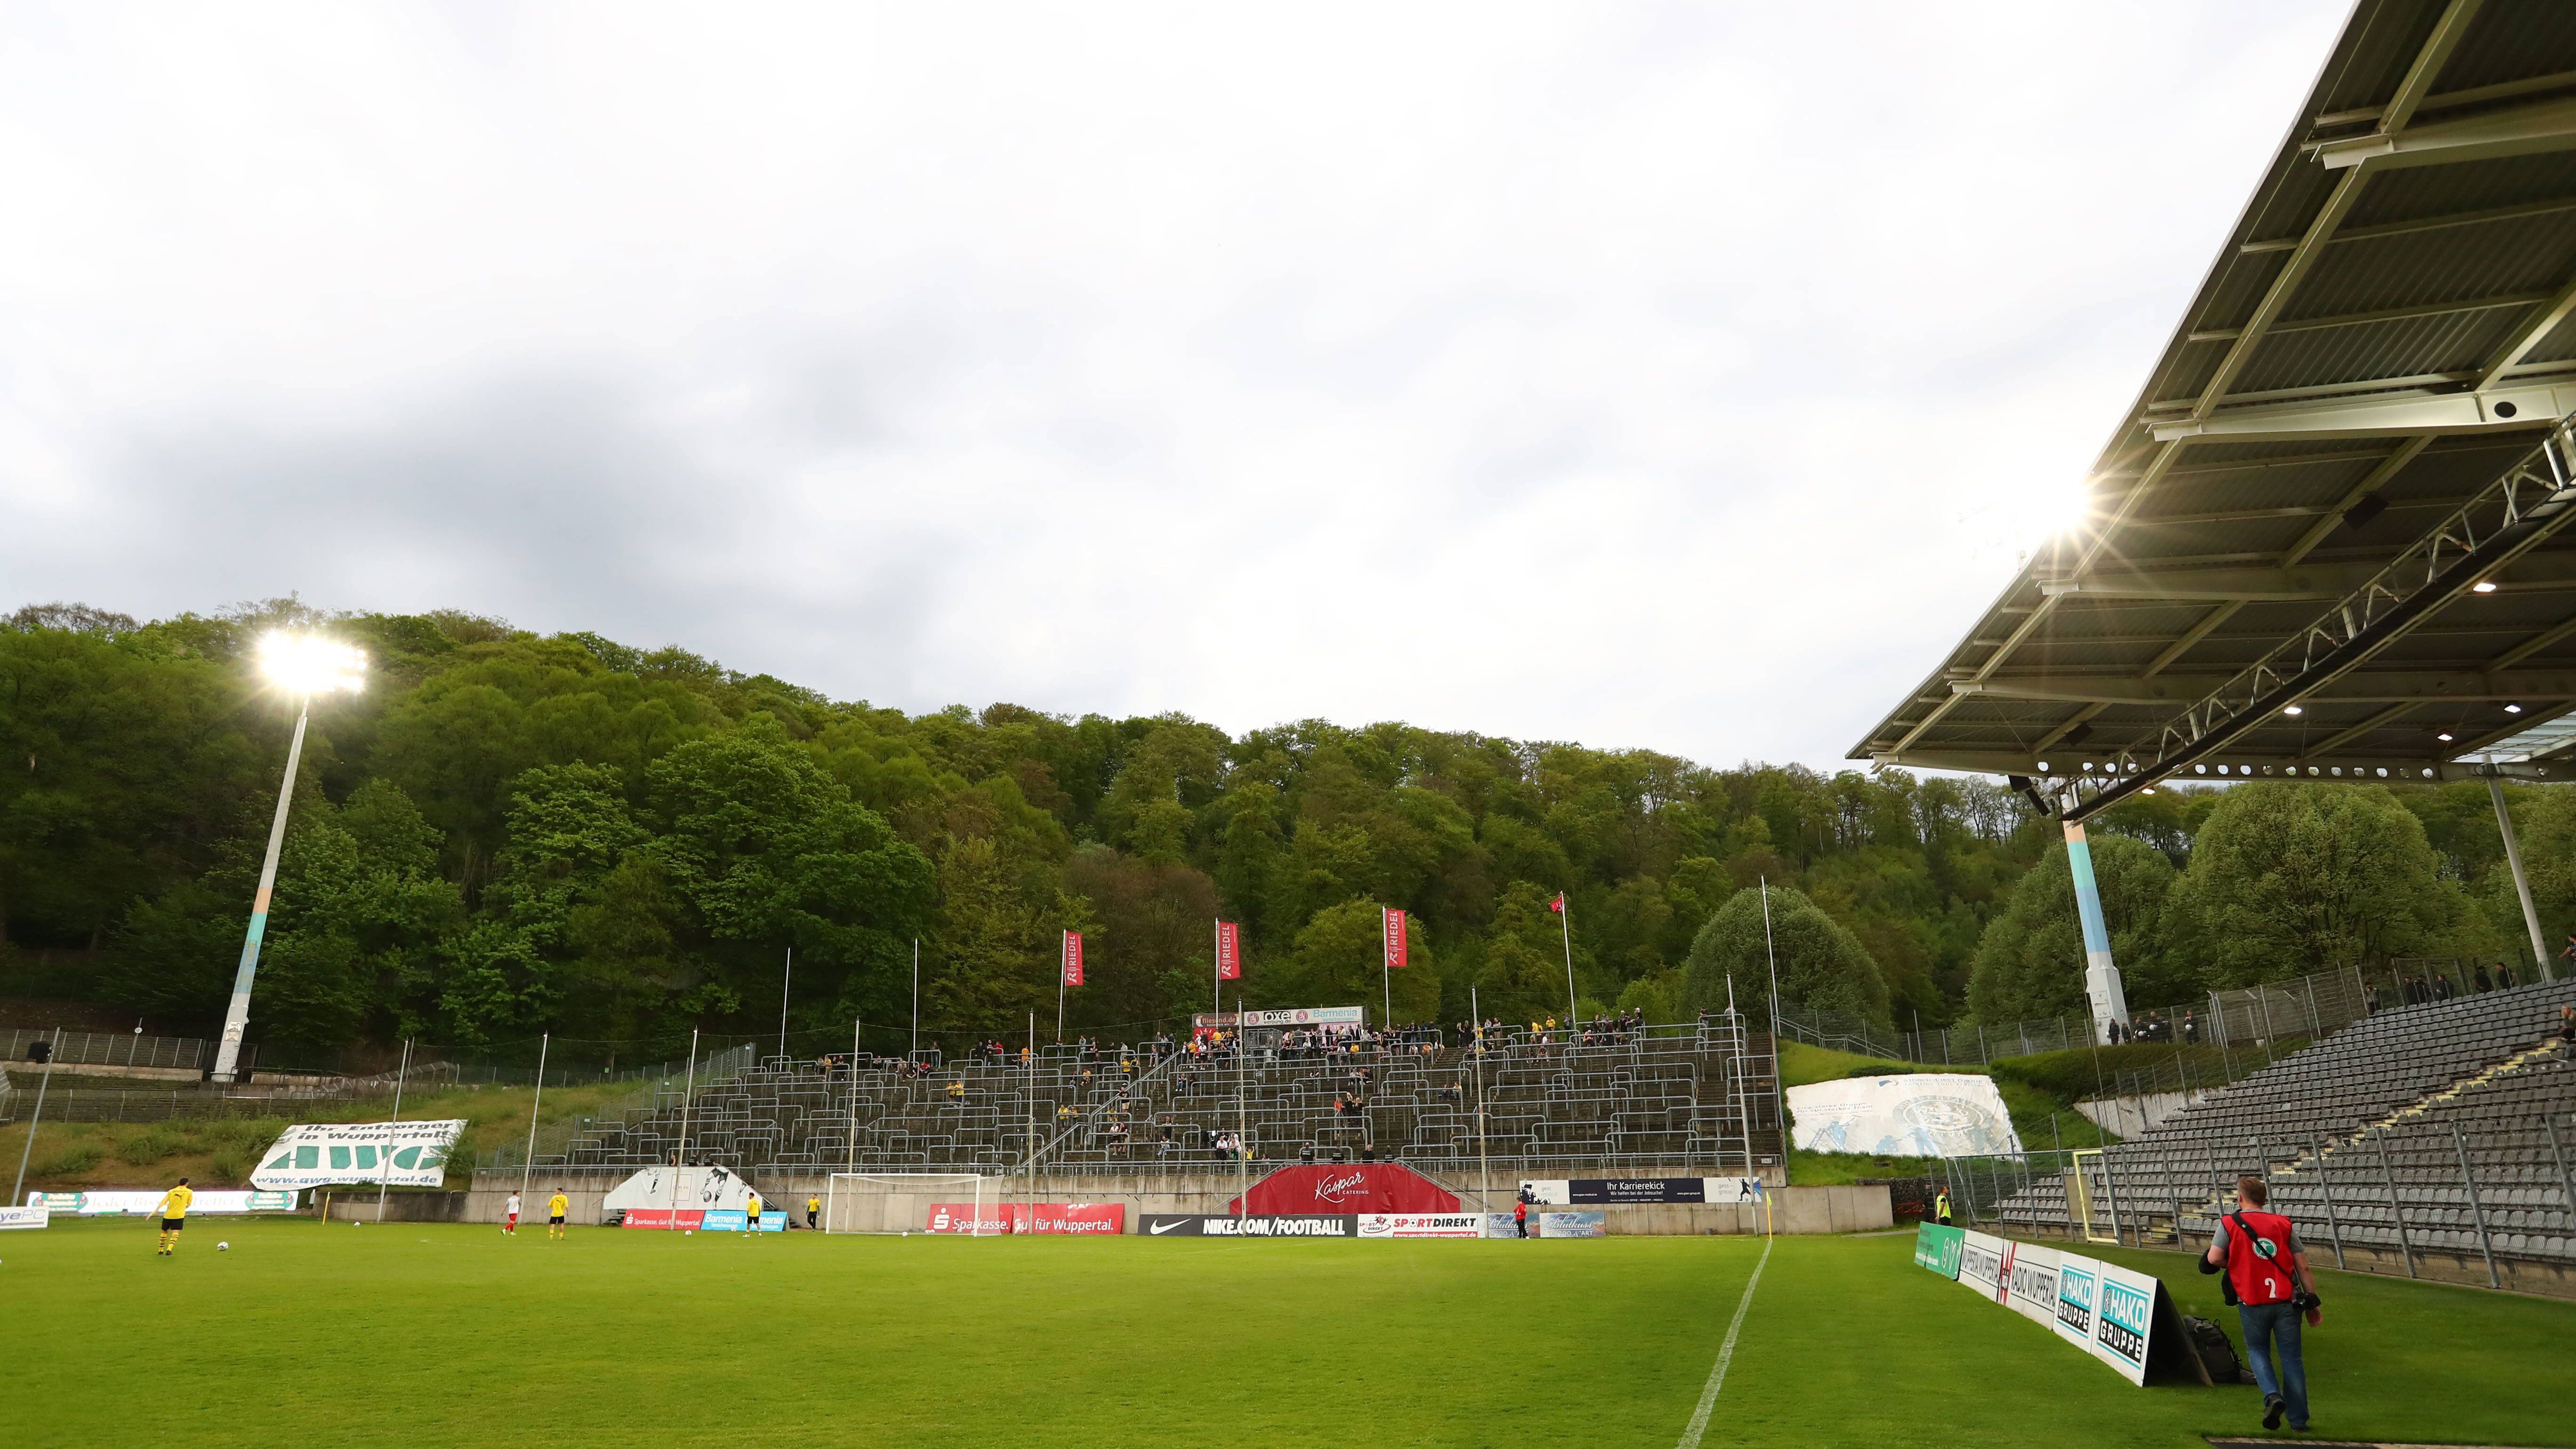 
                <strong>Wuppertaler SV - VfL Bochum</strong><br>
                Anstoß: Samstag, 7. August, 15:30 UhrStadion: Stadion am ZooZuschauer erlaubt: 4.900
              